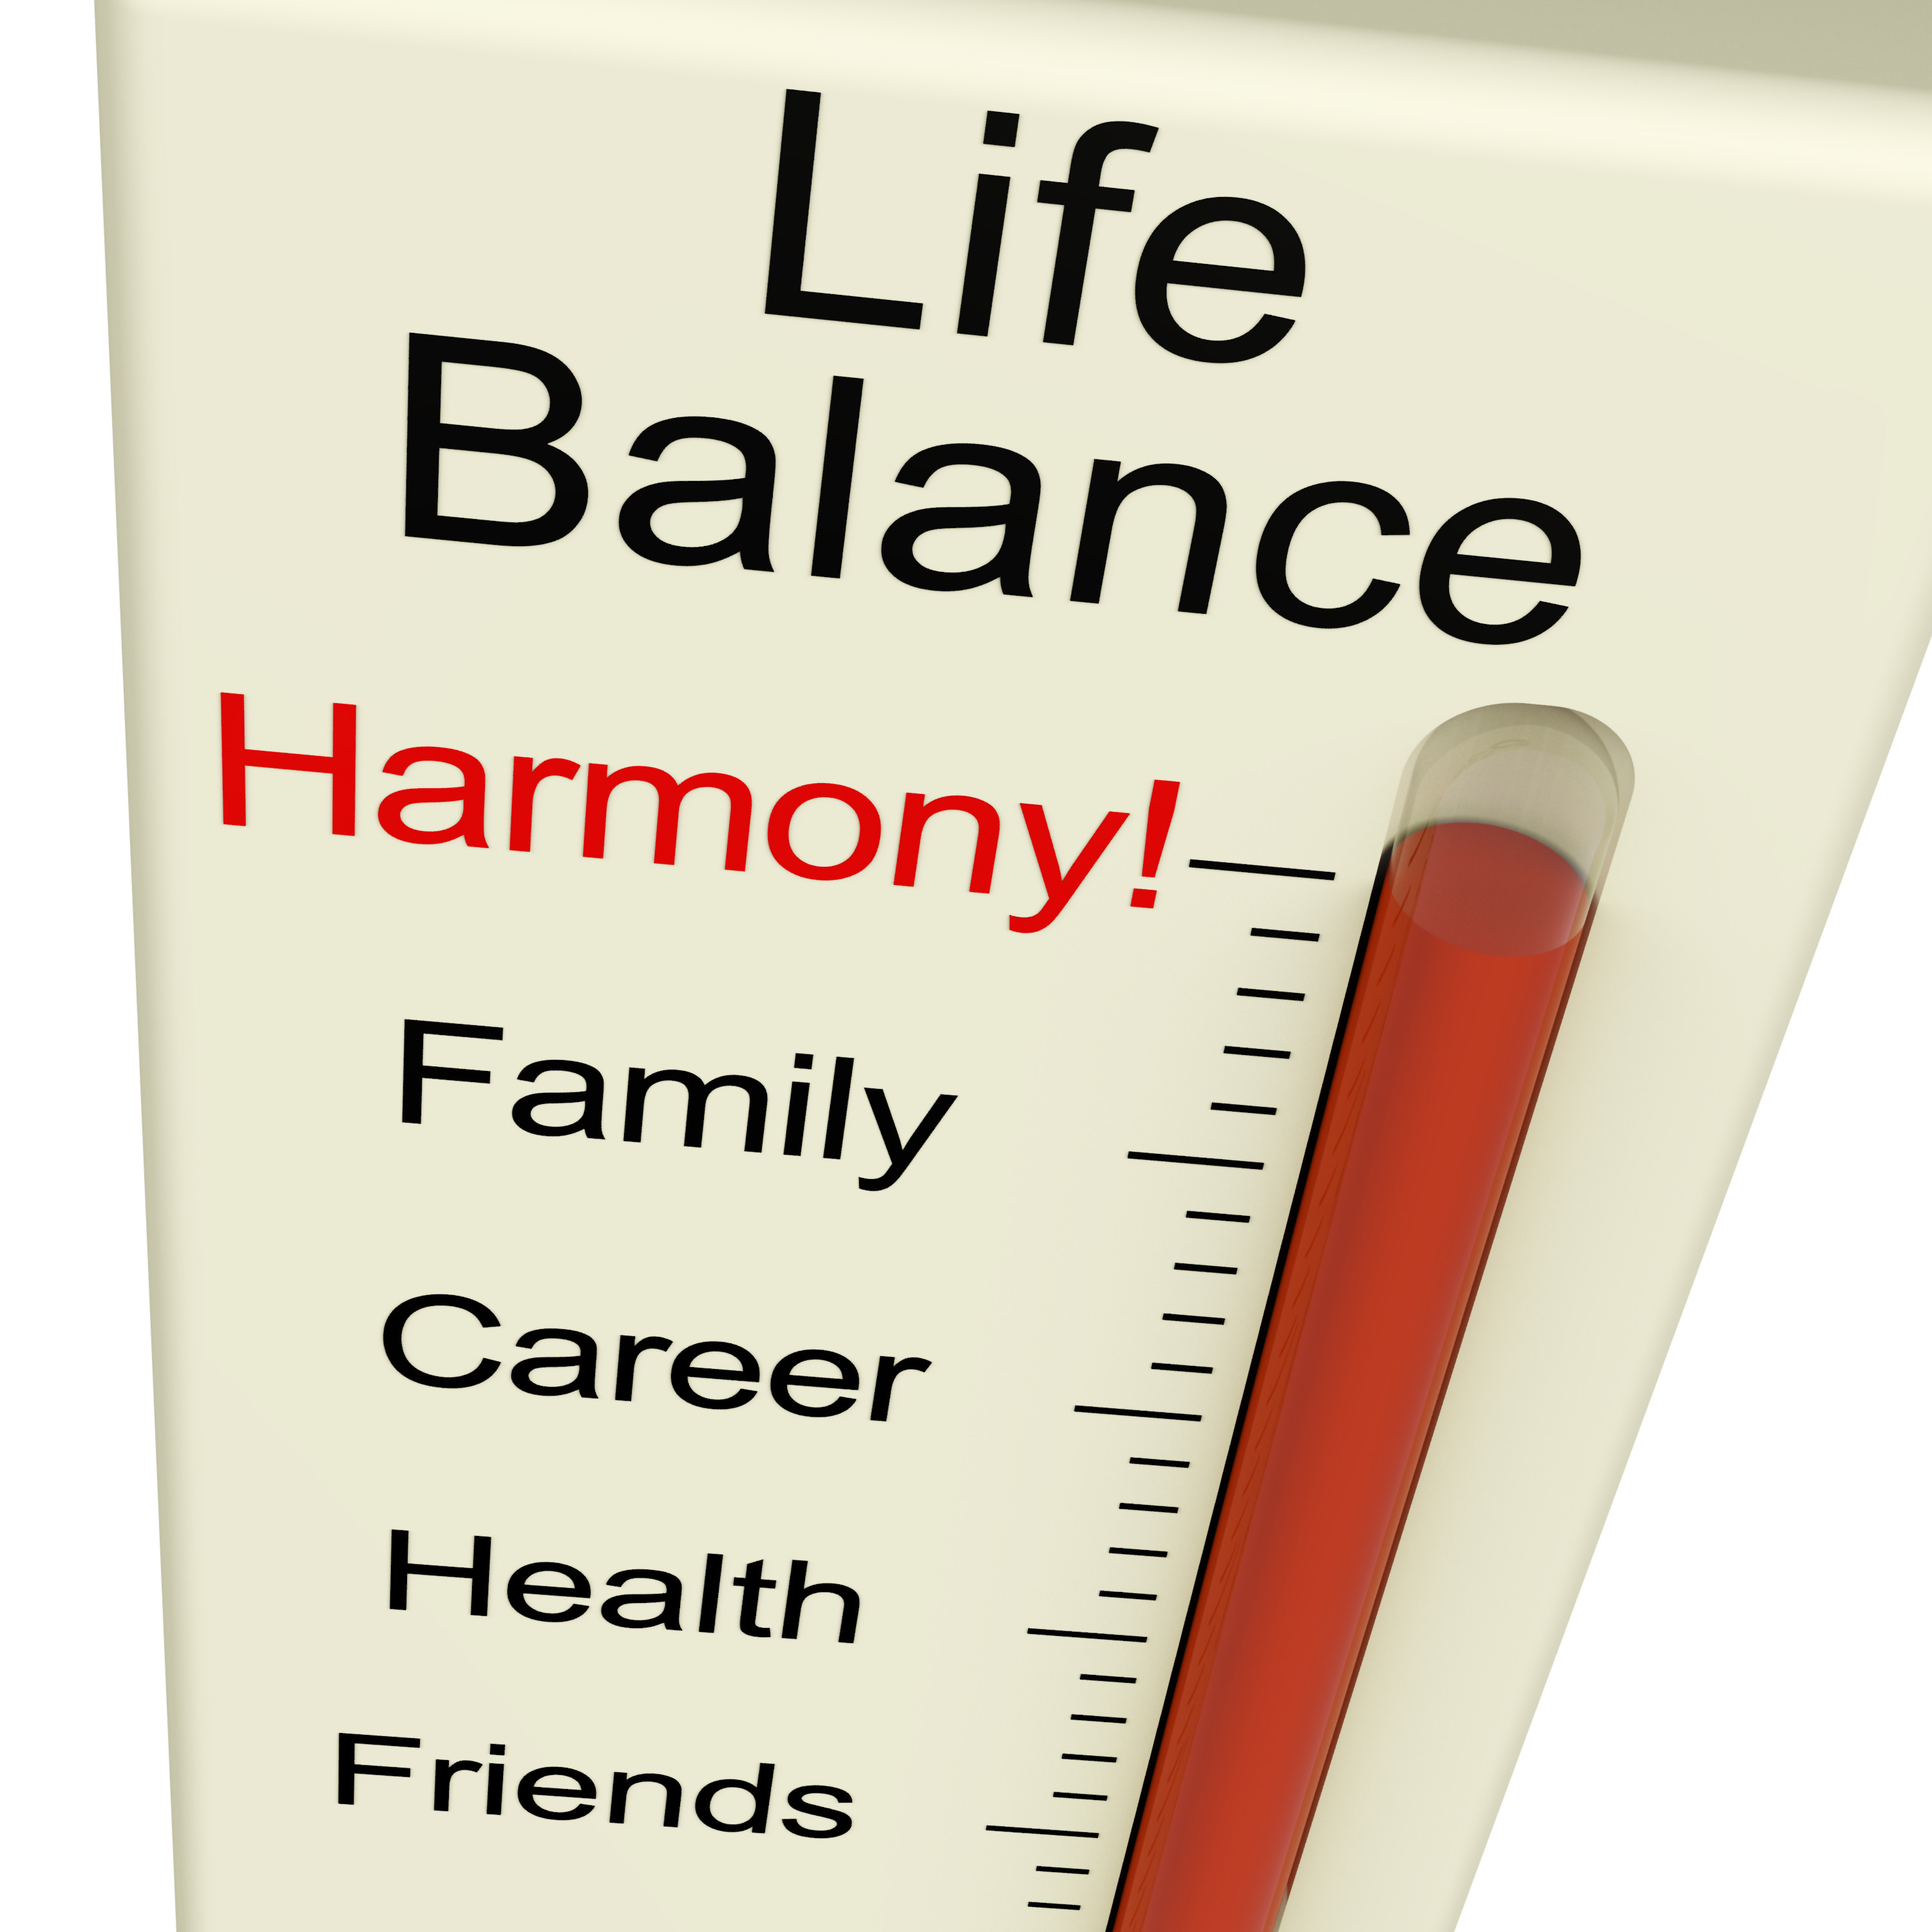 Long life work. Balance and Harmony. Balance in Life. Healthy work Life Balance. Balance career Family.